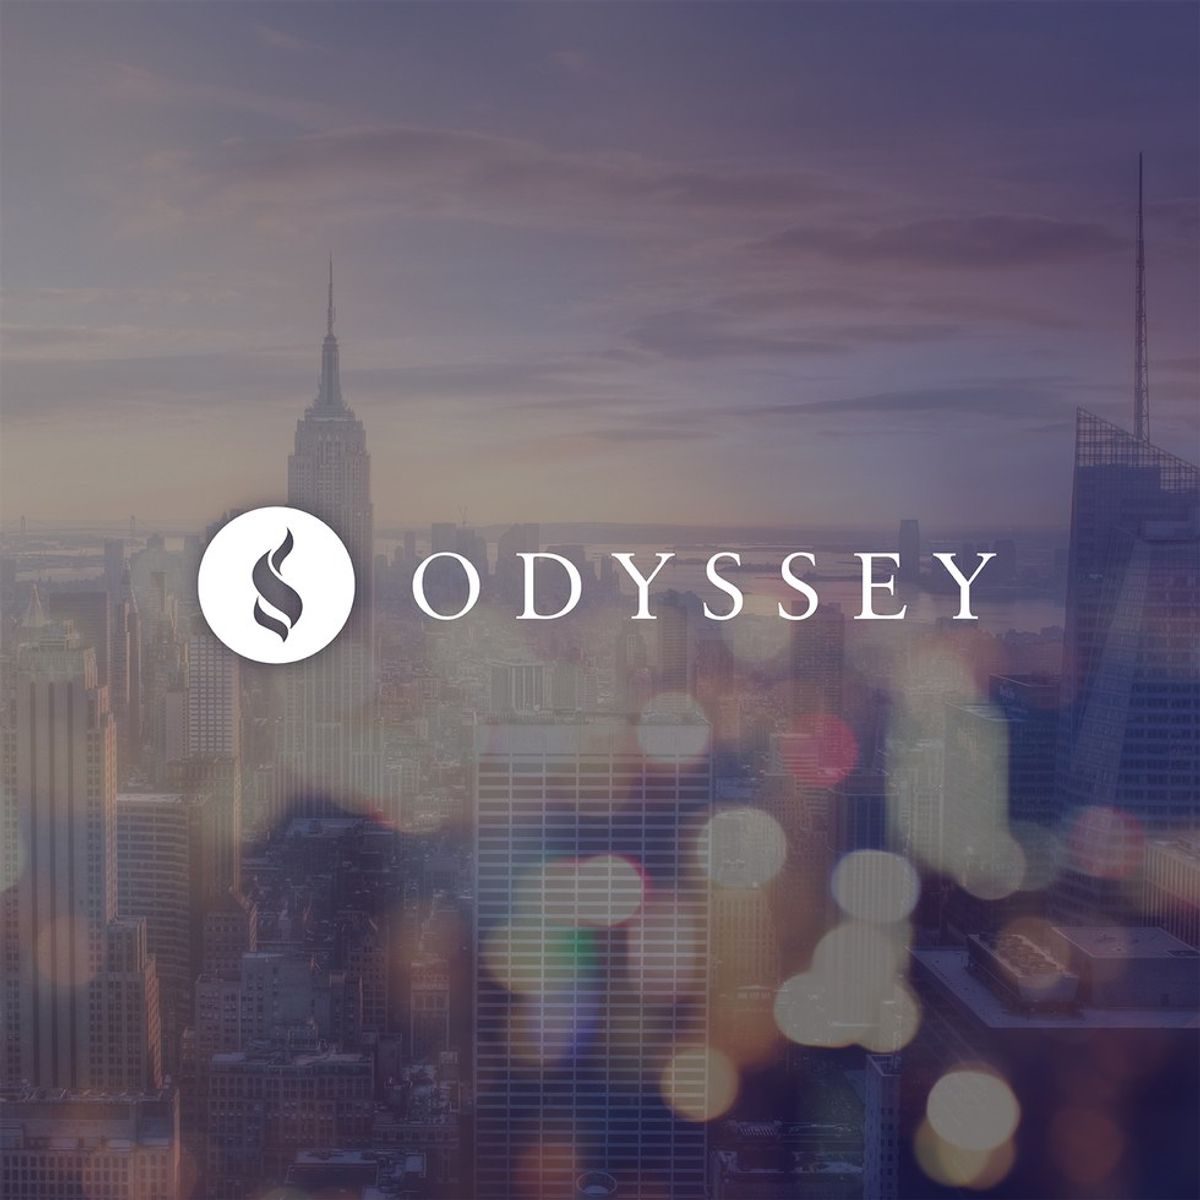 The Odyssey Incentive Program